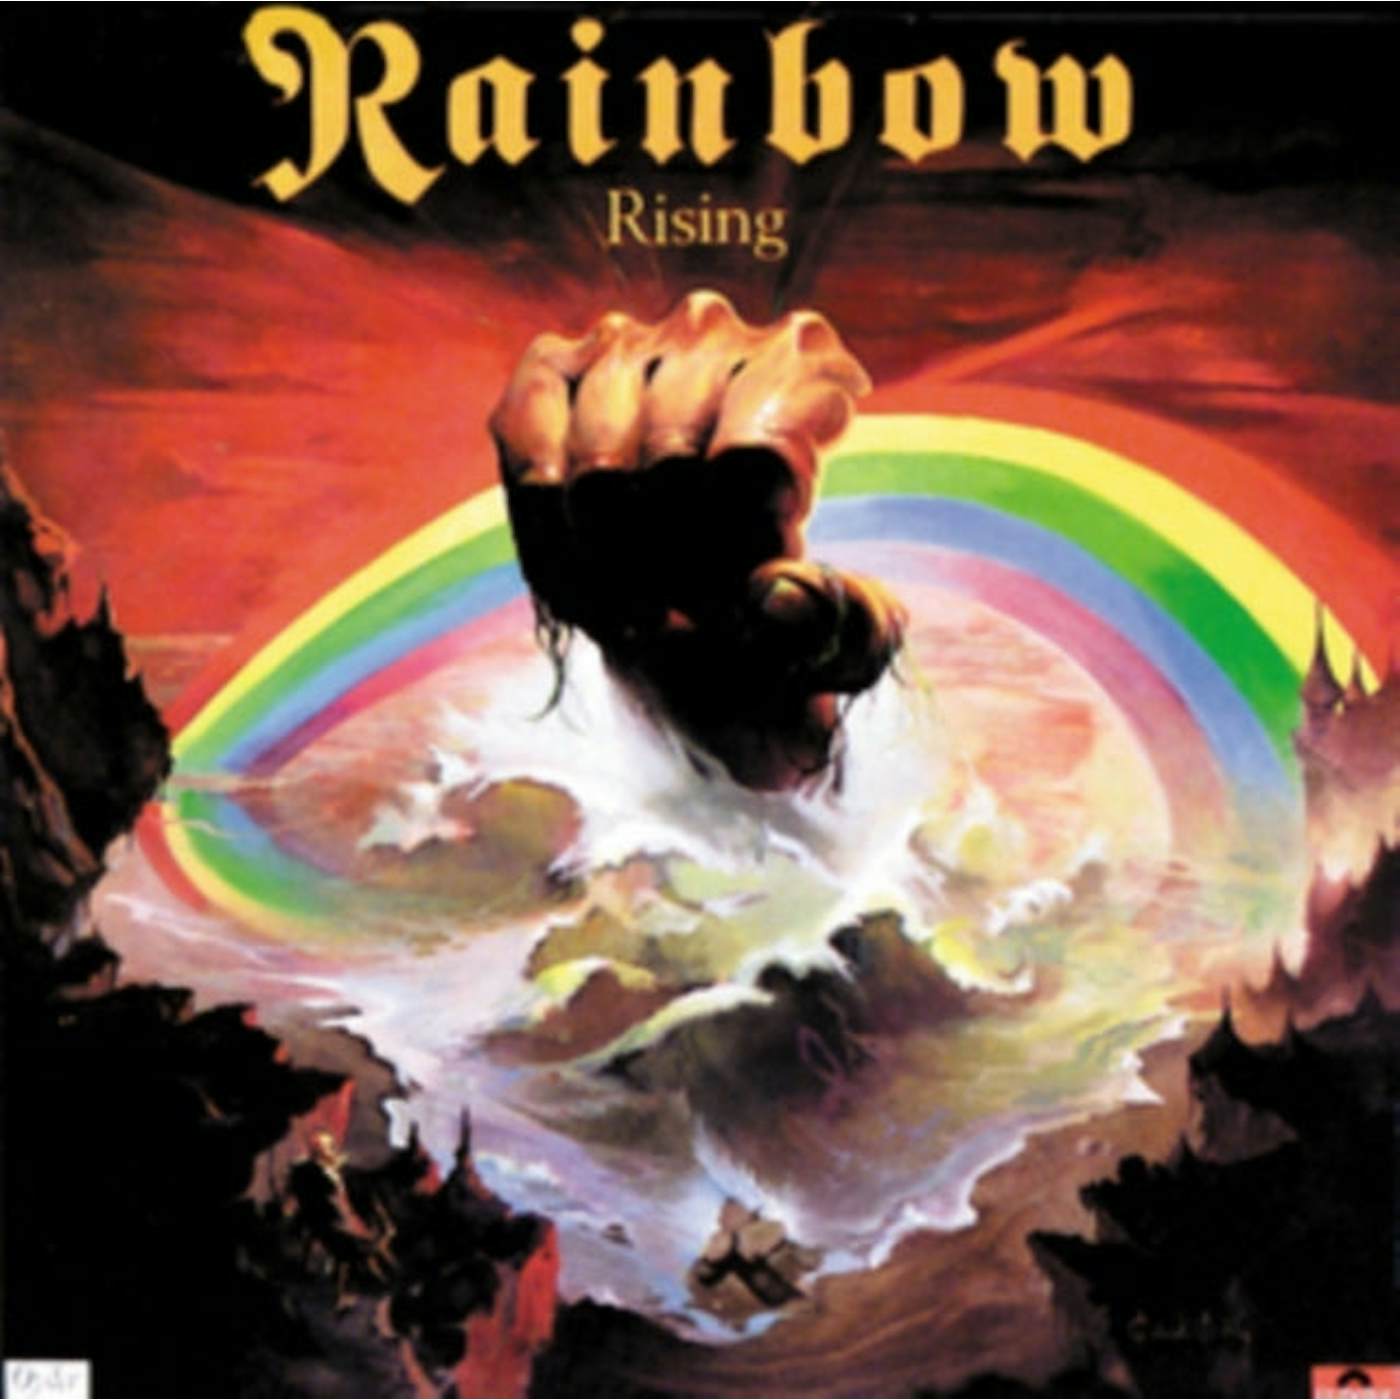 Rainbow LP Vinyl Record - Rising